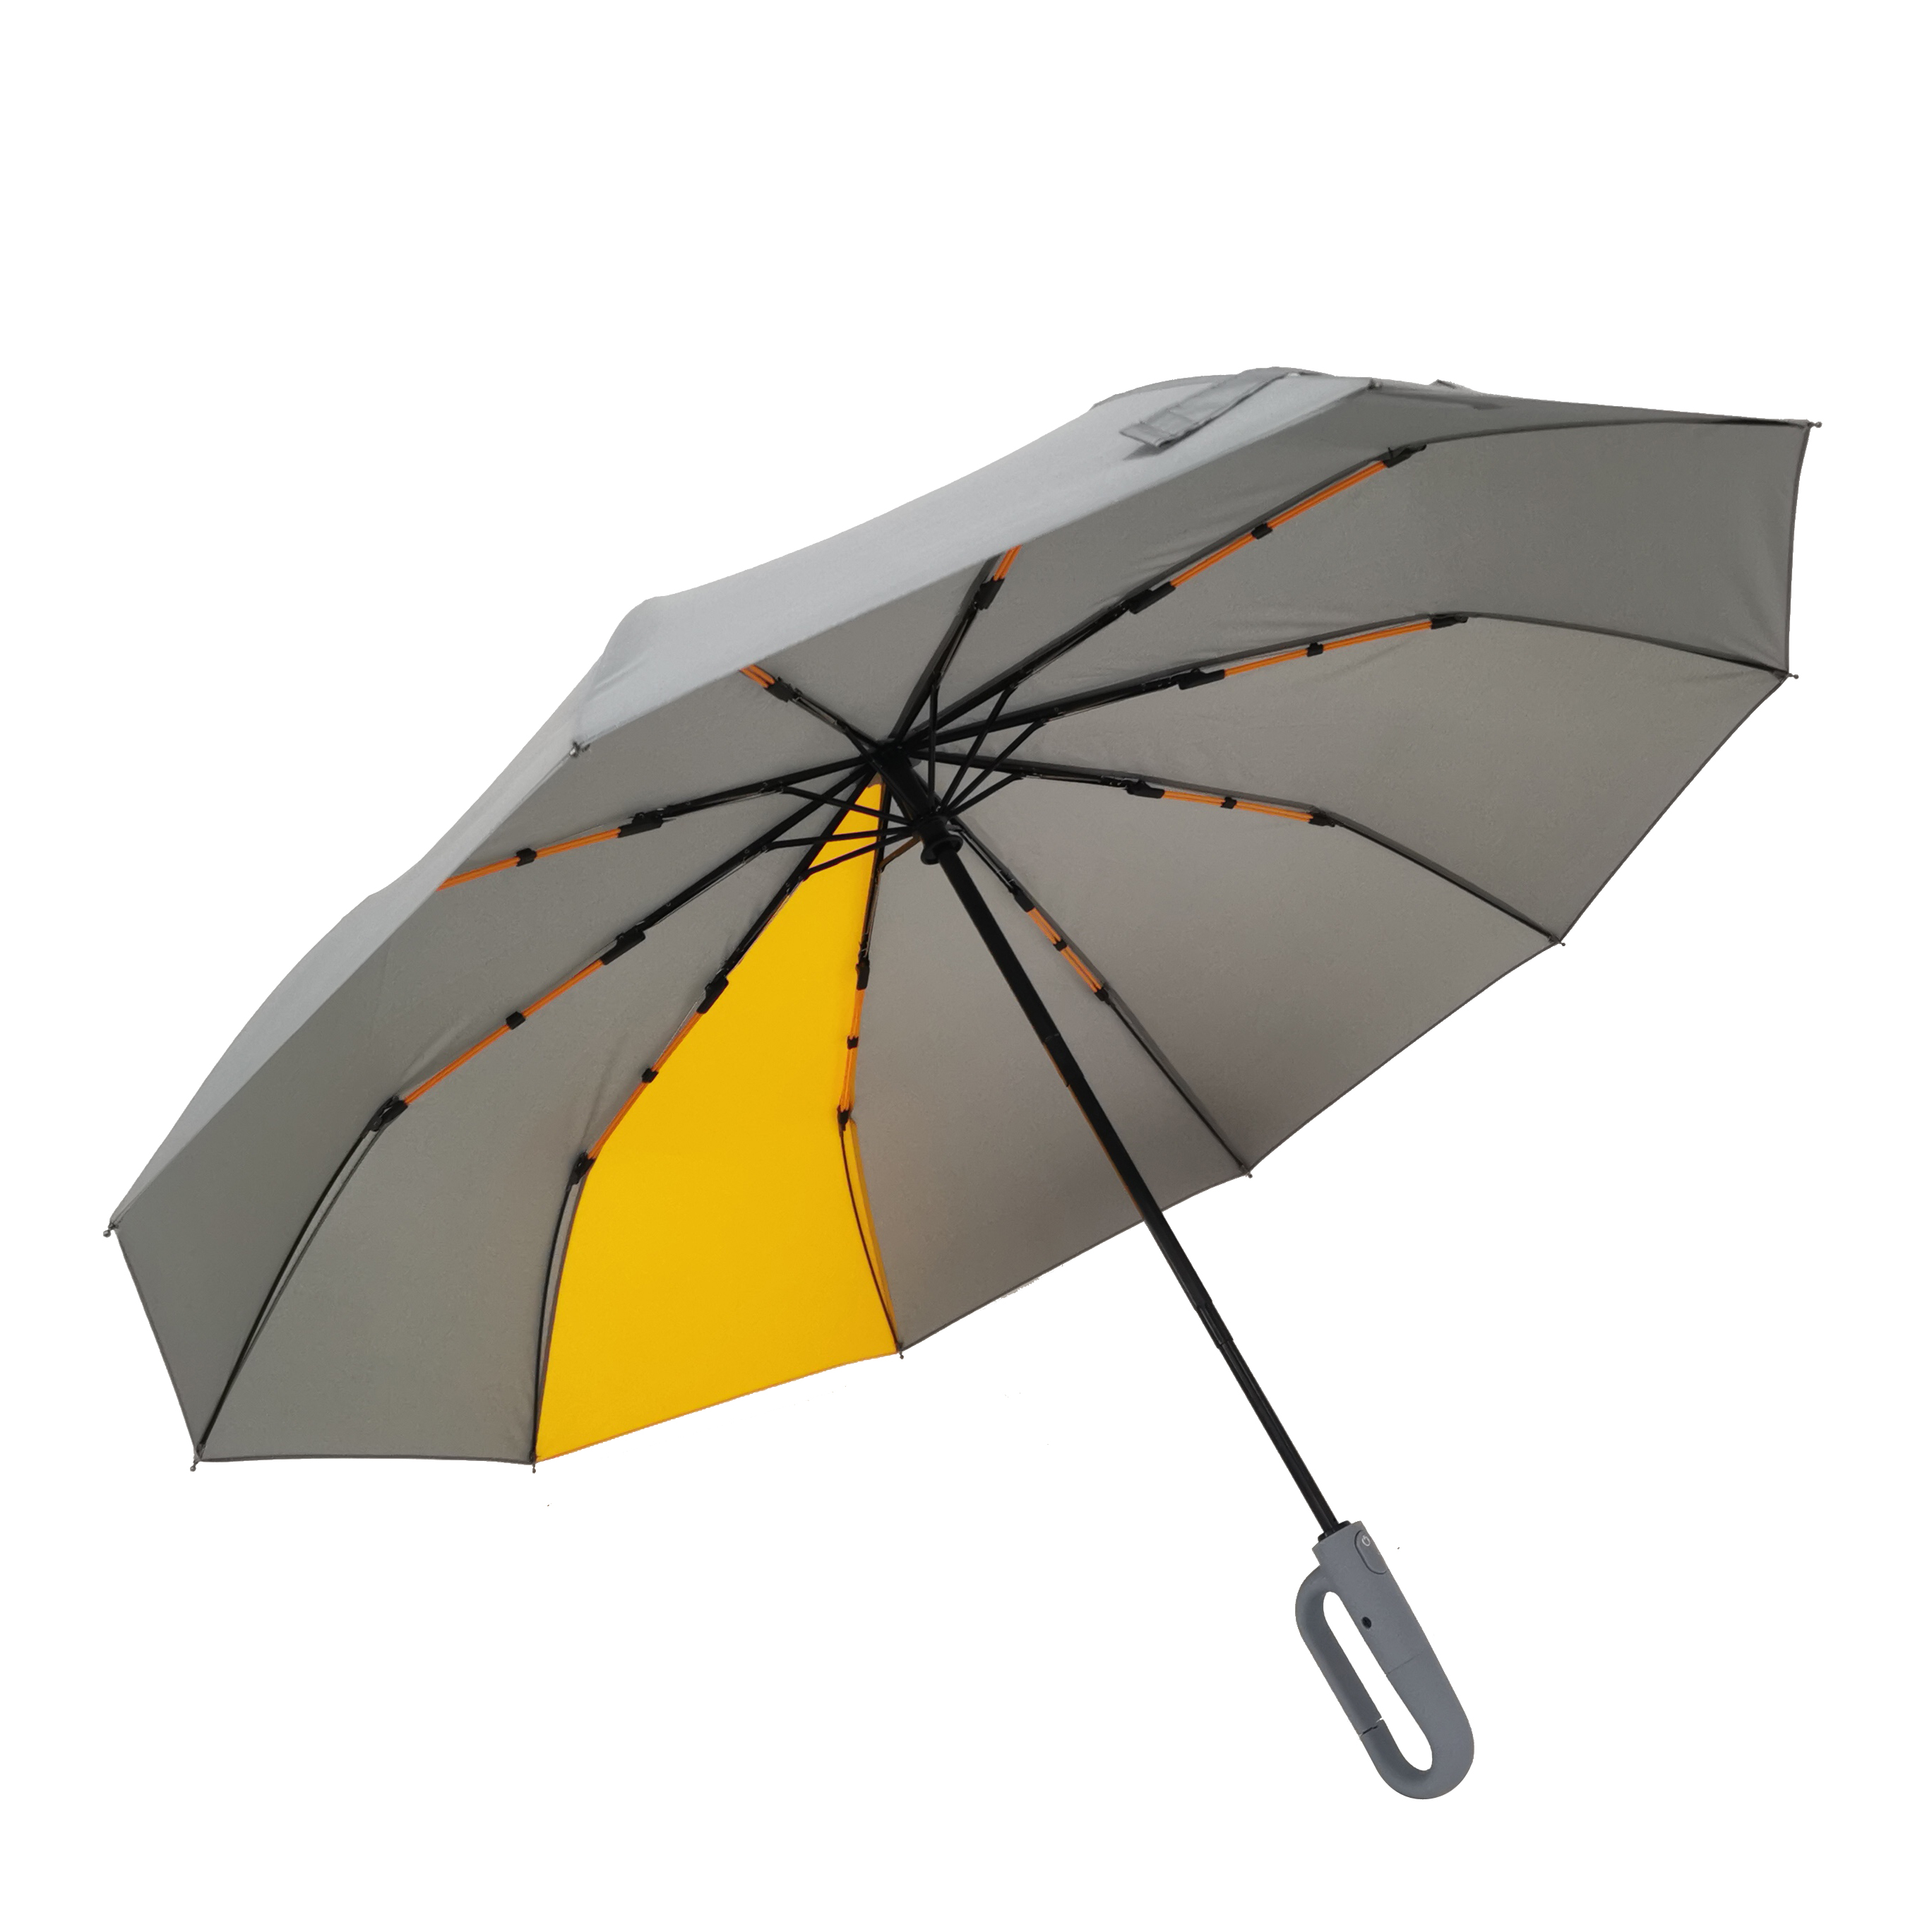 https://www.hodaumbrella.com/hook-up-lock-design-outdoor-sun-protection-easy-to-travel-buckle-dual-folding-umbrella-product